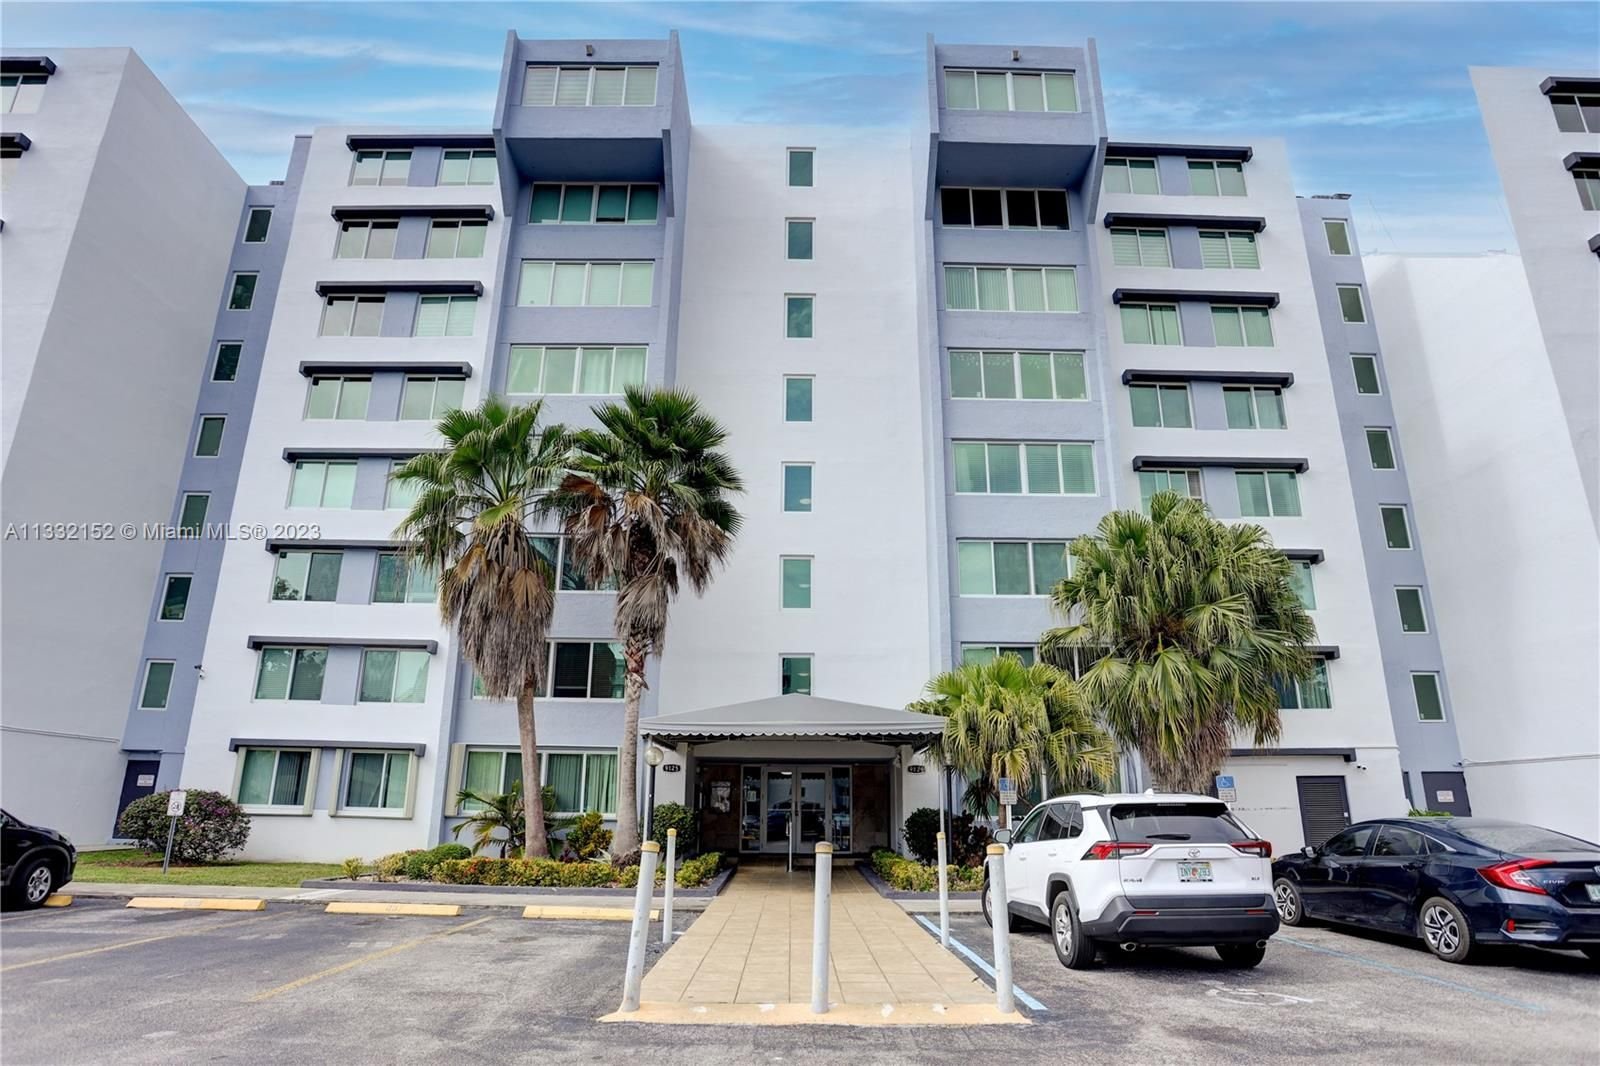 Real estate property located at 9125 77th Ave #504, Miami-Dade County, Miami, FL